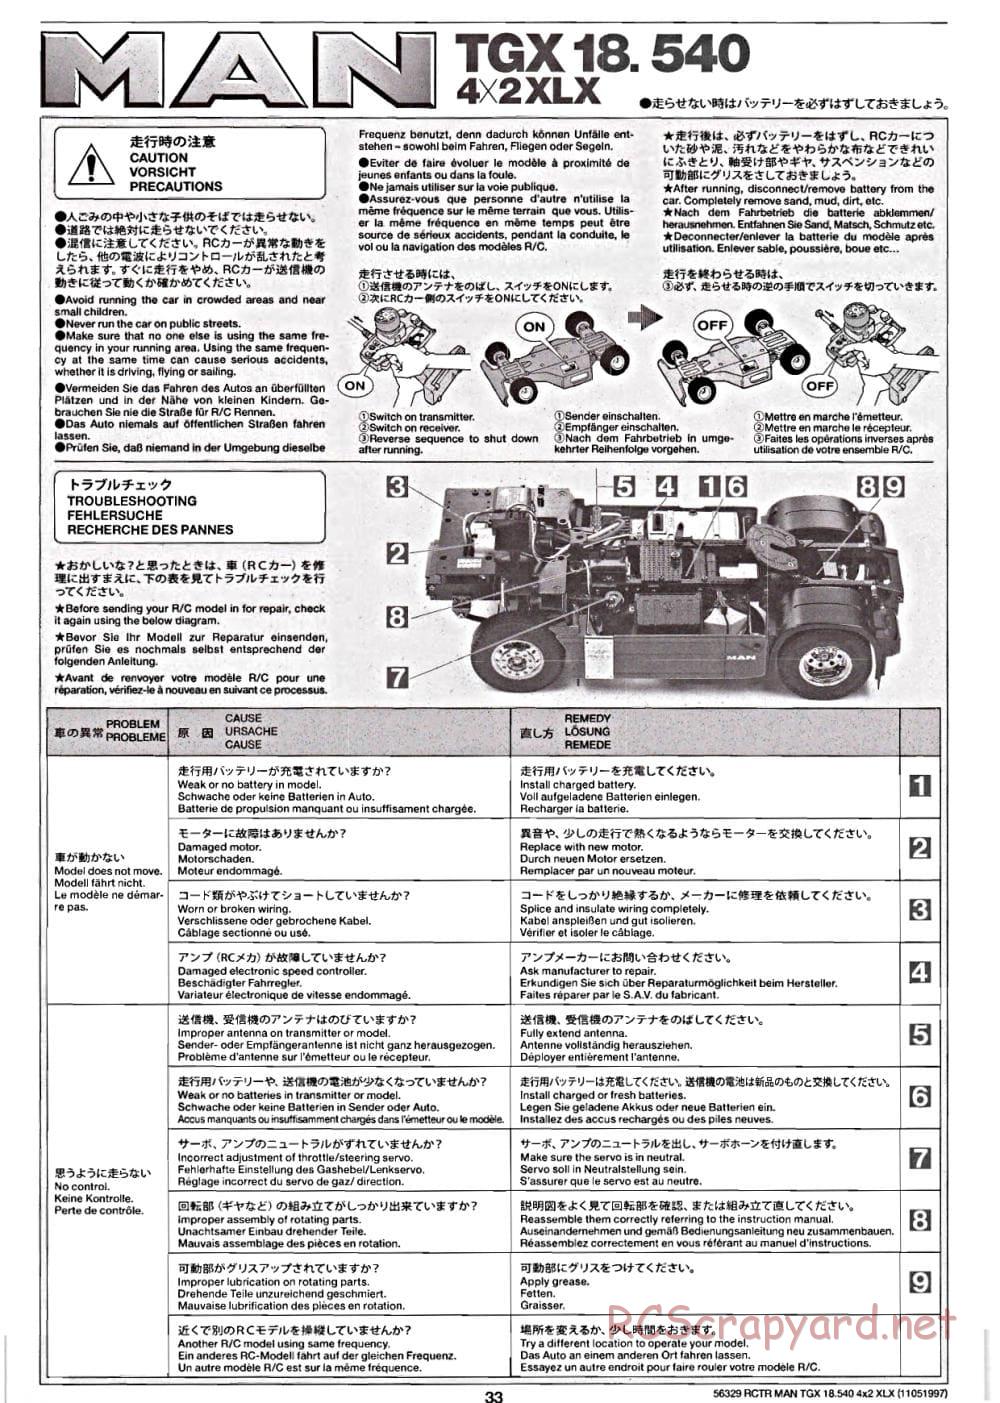 Tamiya - MAN TGX 18.540 4x2 XLX - Manual - Page 33